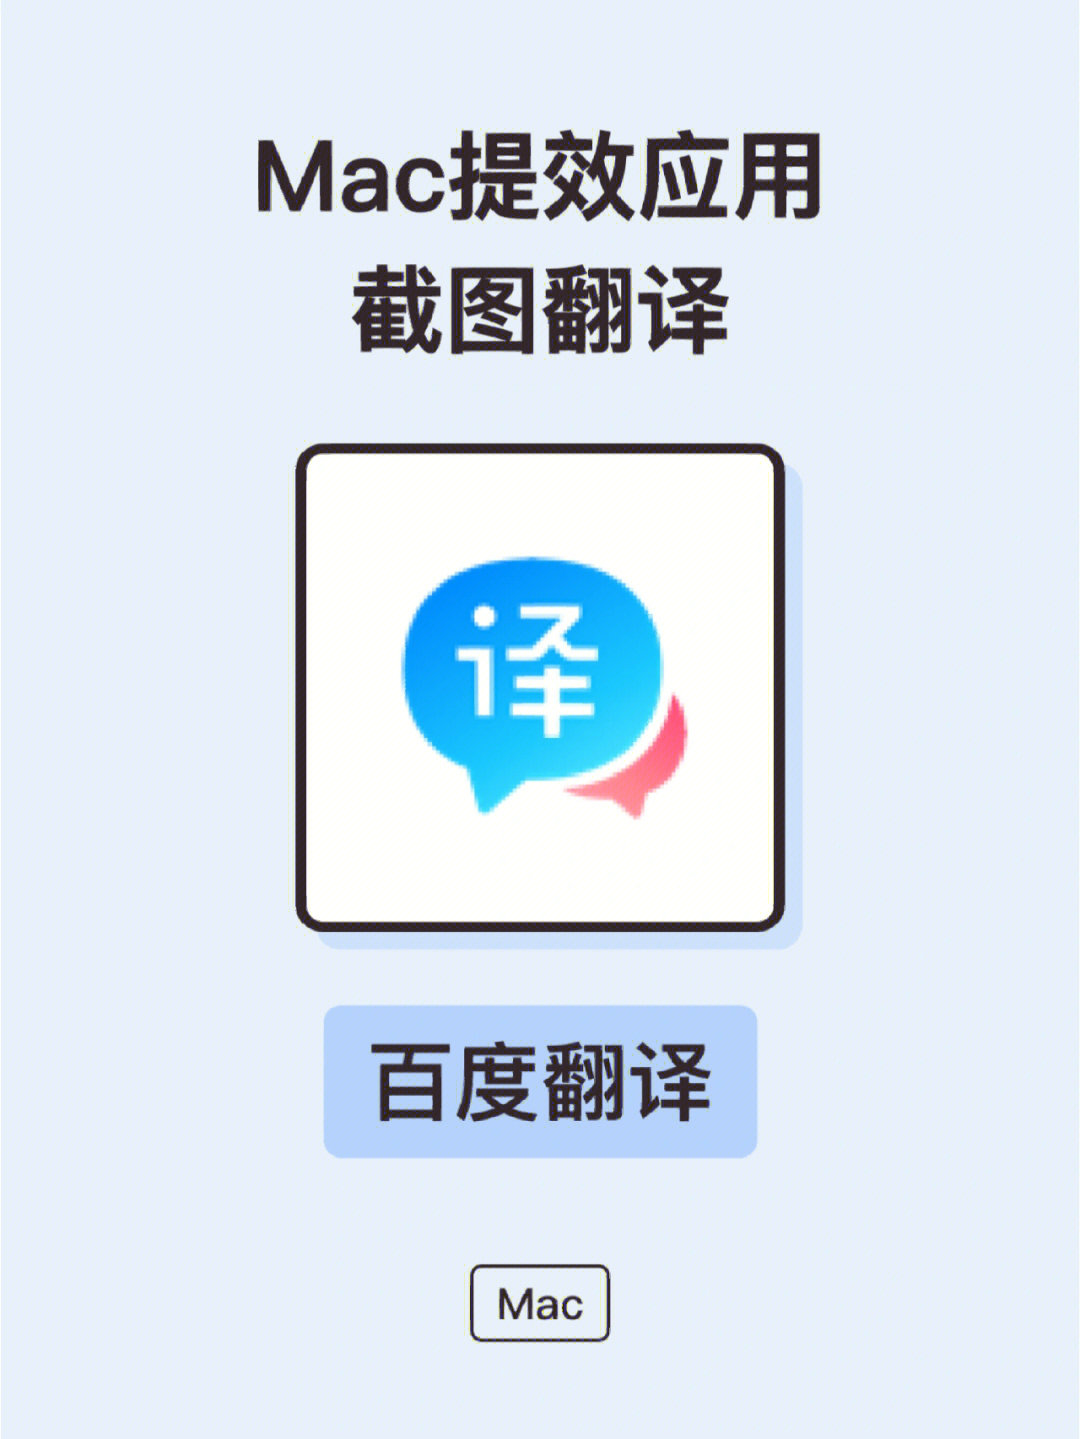 mac提效应用截图翻译划词翻译